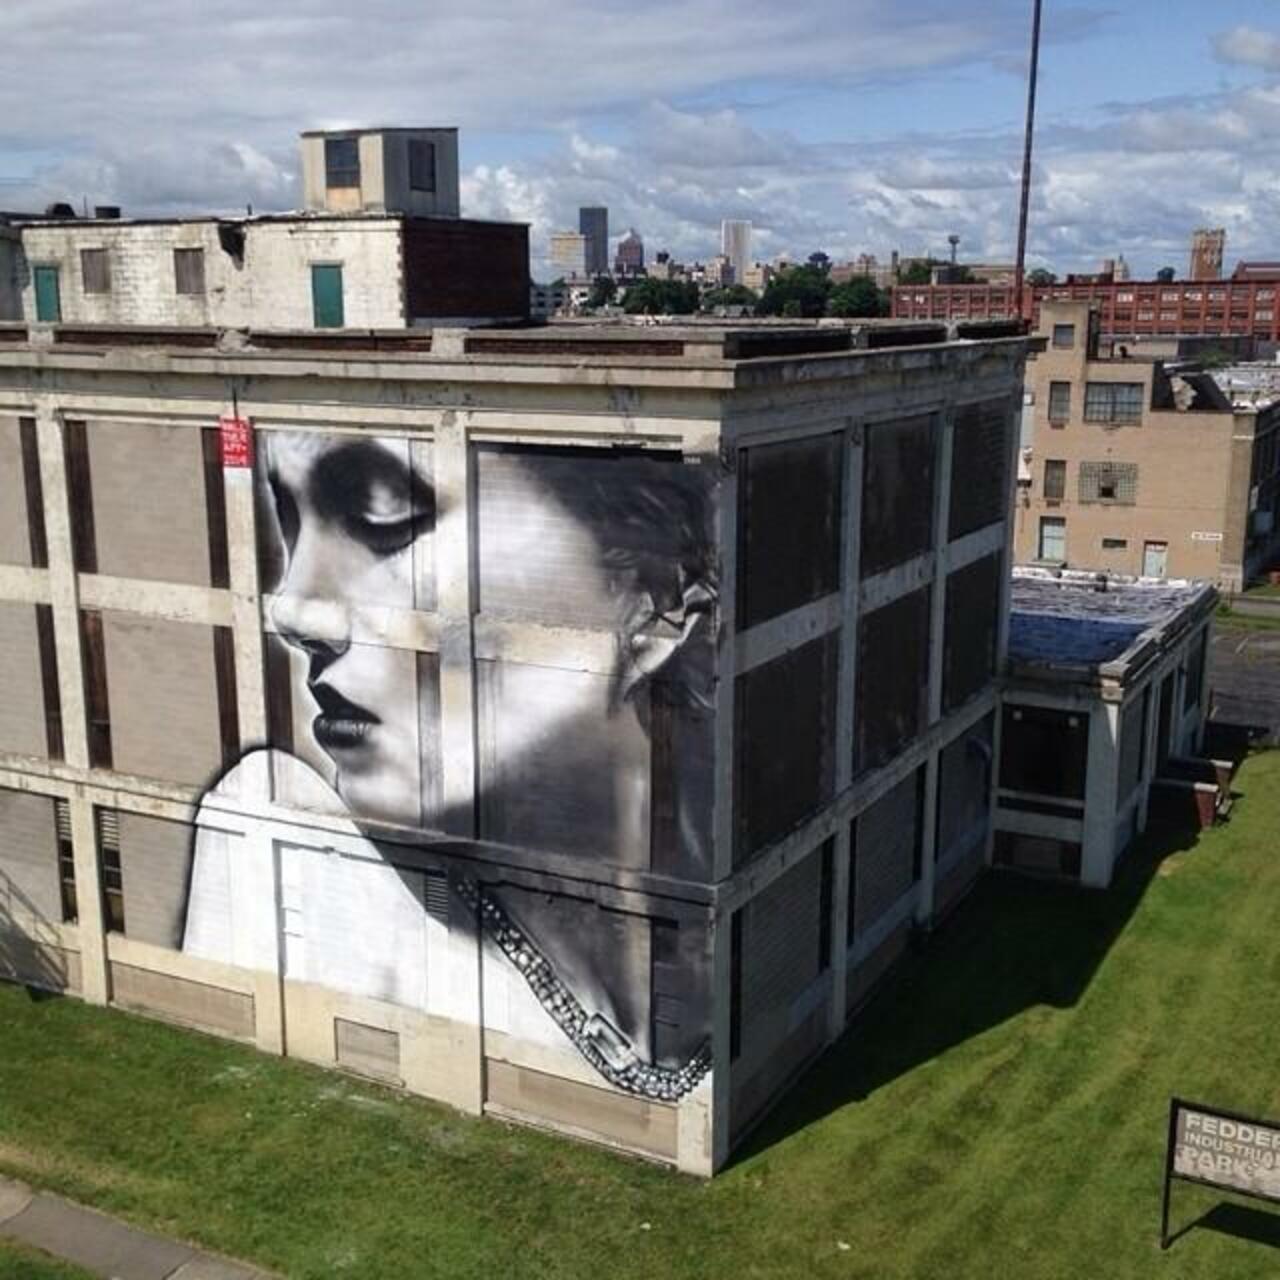 RT @designopinion: Artist Omen514 new large scale Street Art mural located in Rochester, NYC #art #graffiti #mural #streetart https://t.co/1aYDHA6q7T